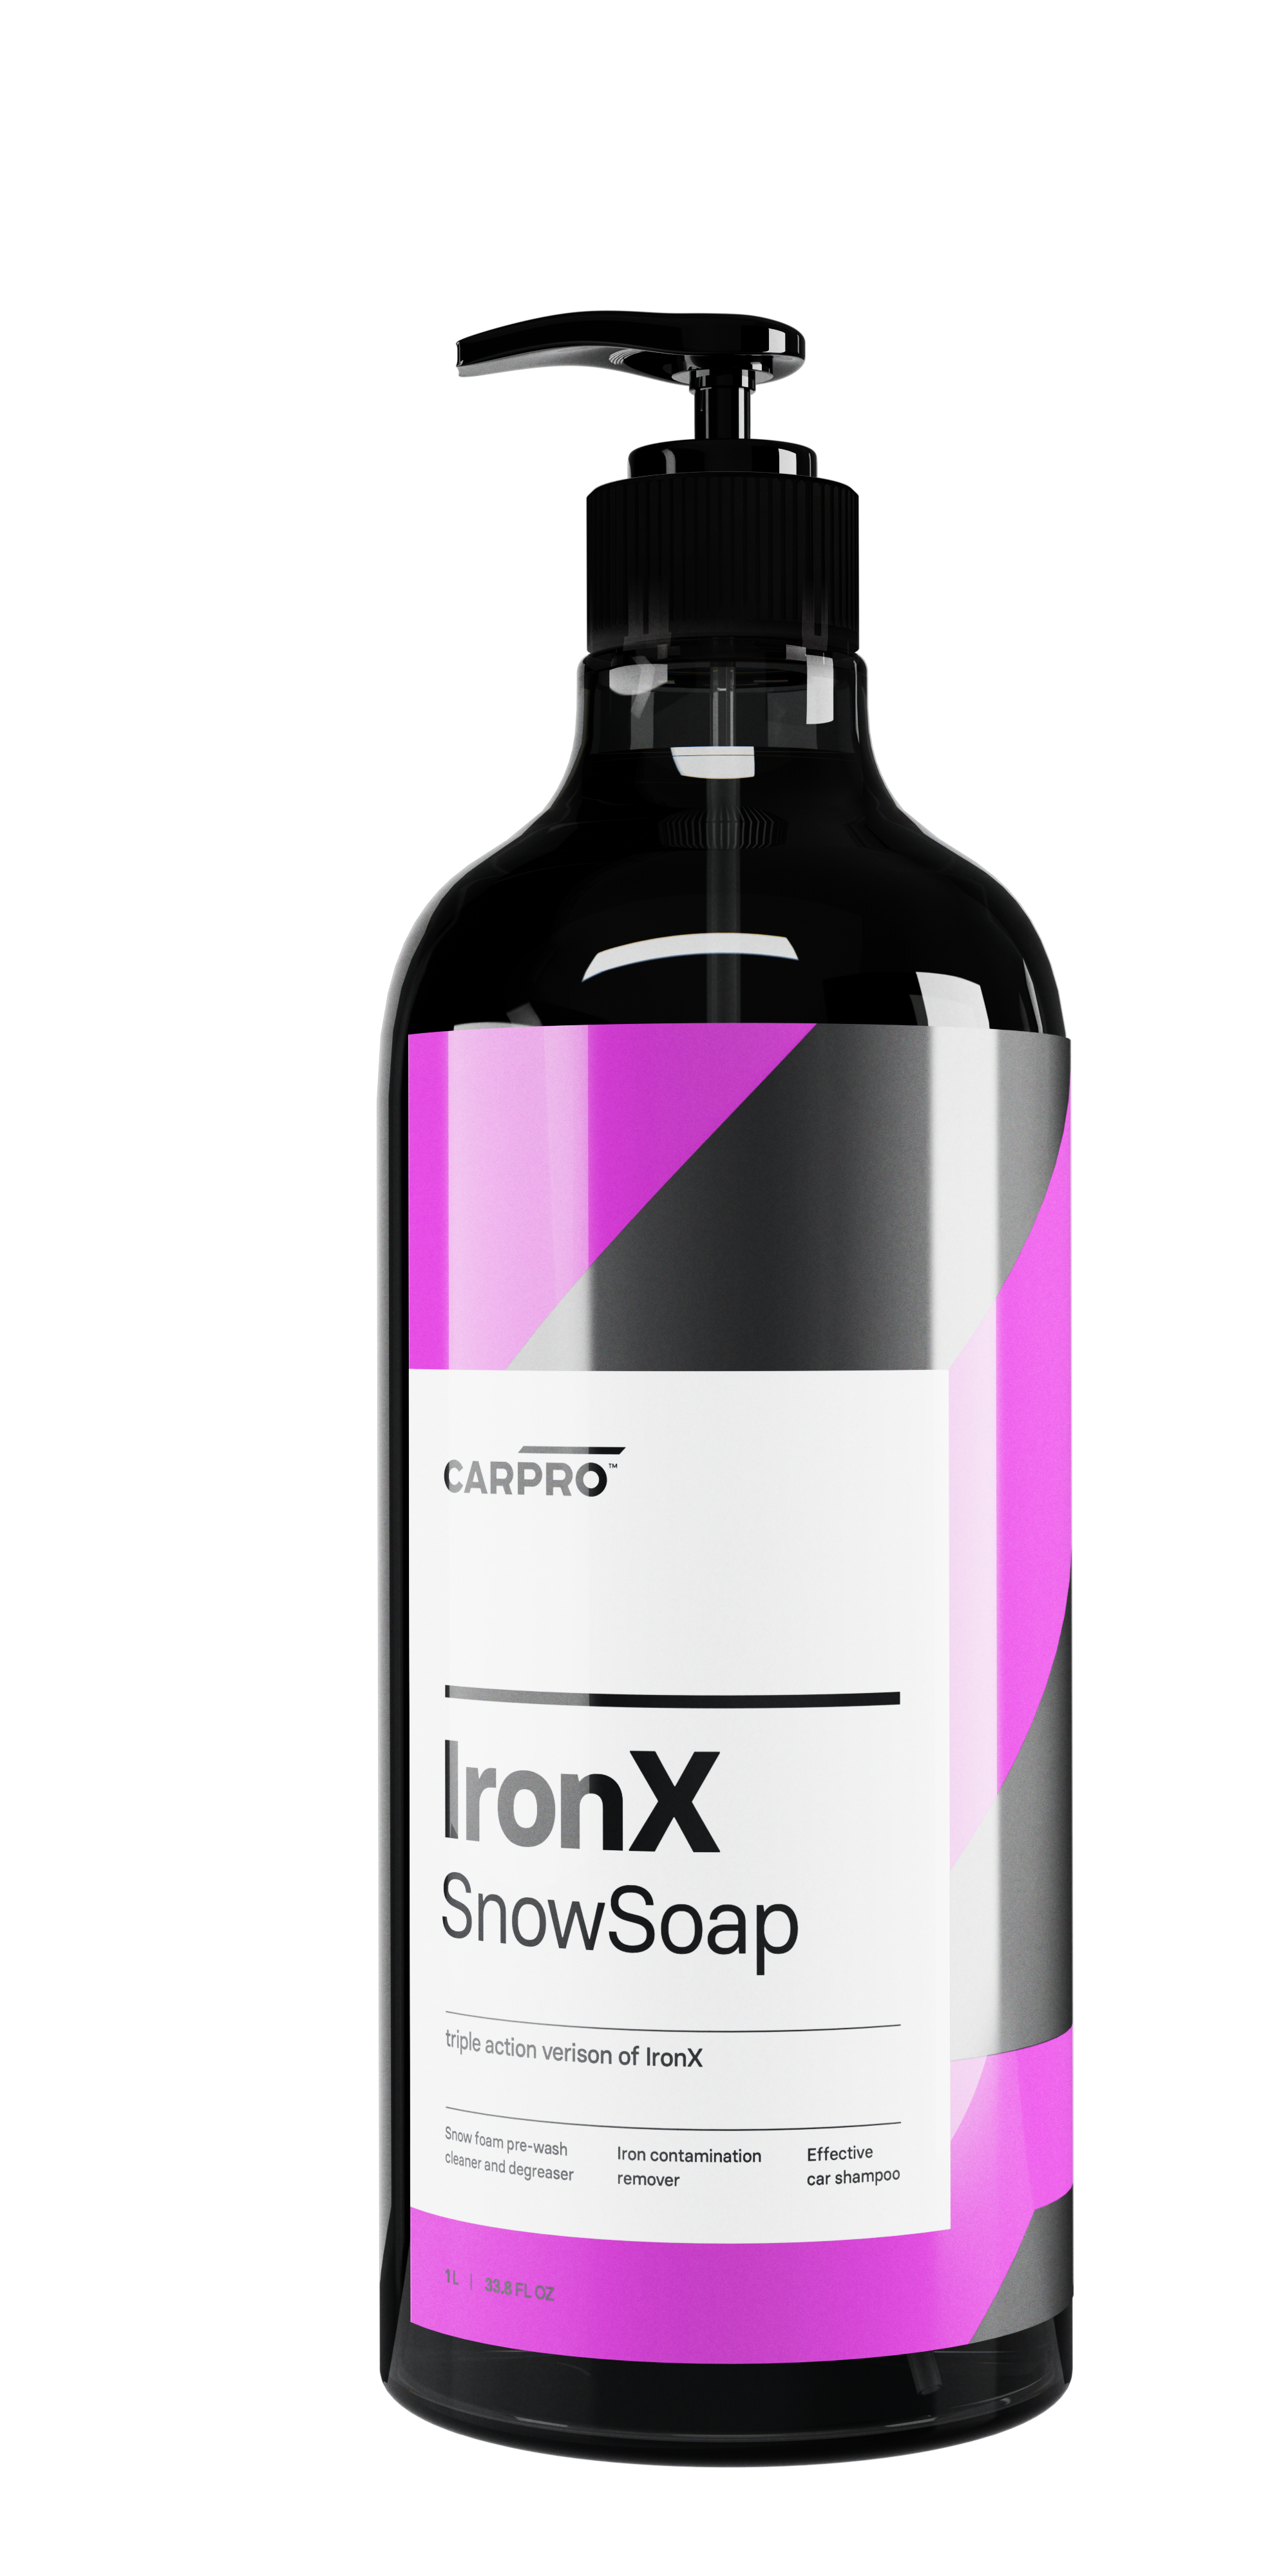 CarPro Iron X Iron Remover - 500 ml - Detailed Image